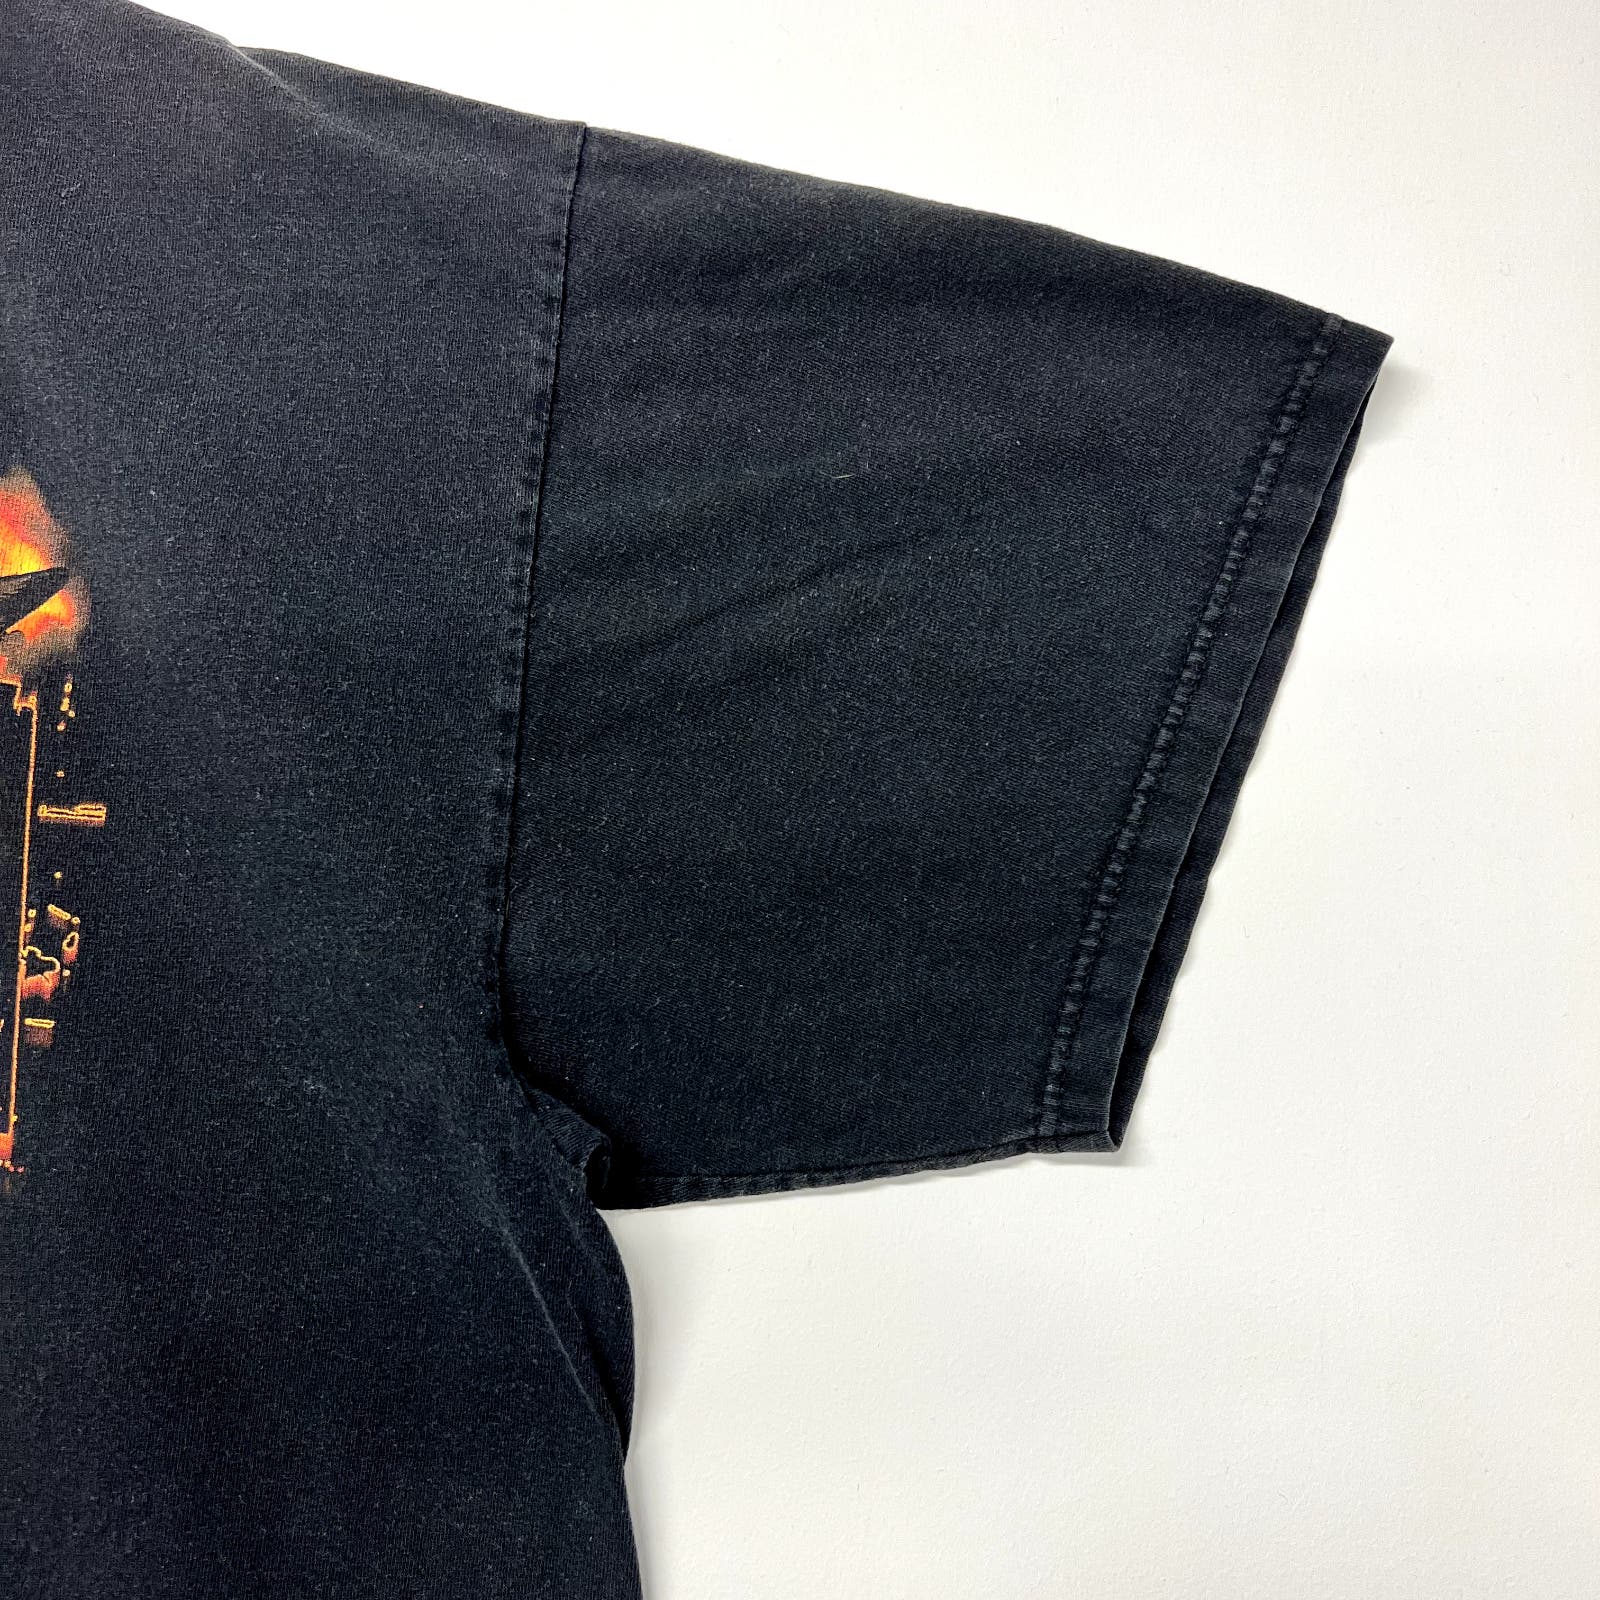 1990s Pantera T-Shirt Size 2XL